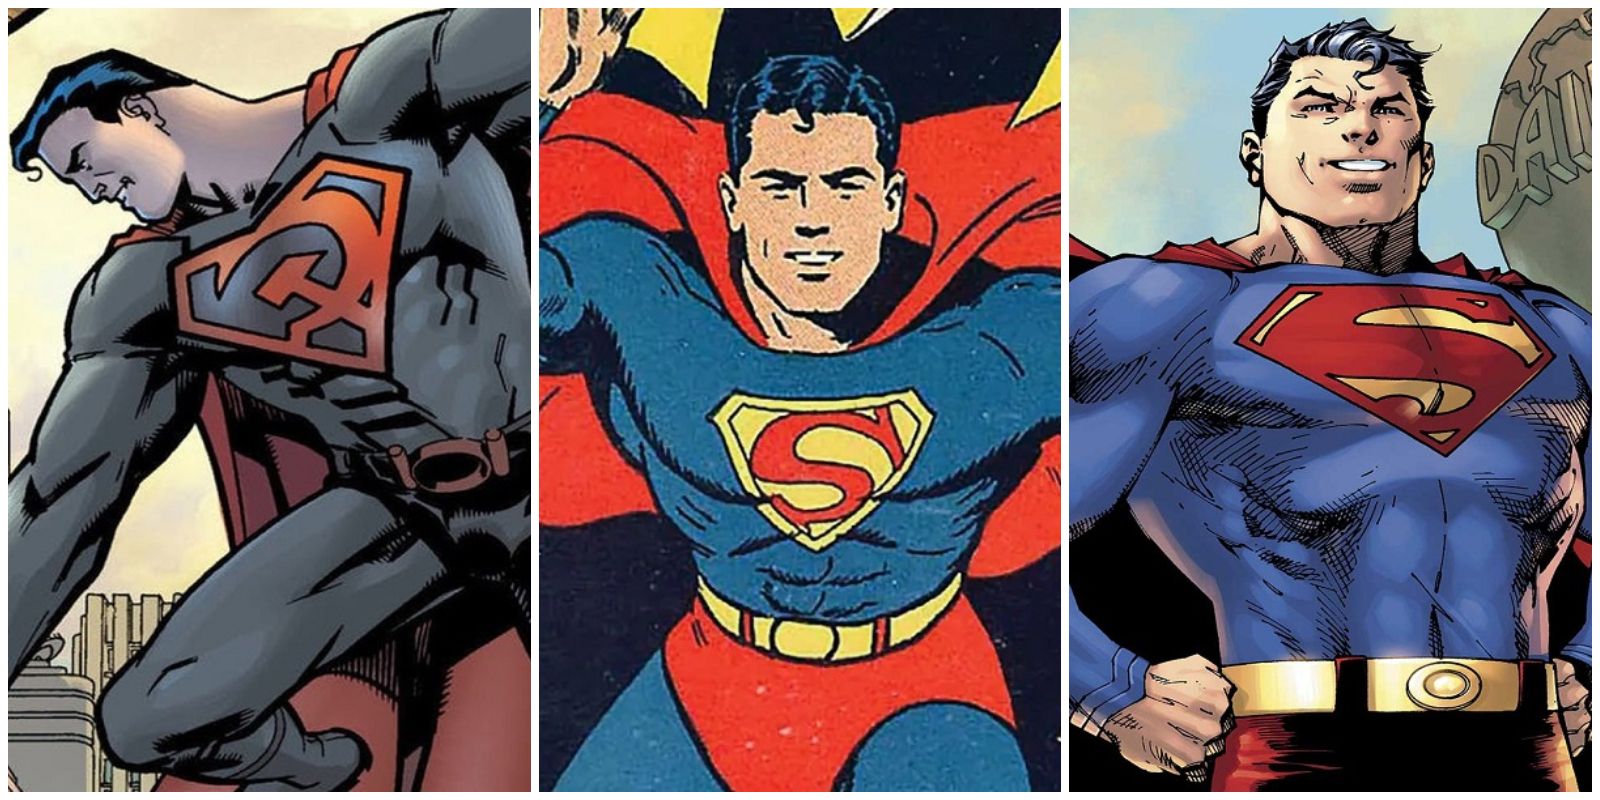 A split image of Superman: Red Son, Golden Age Superman, and Modern Era Superman